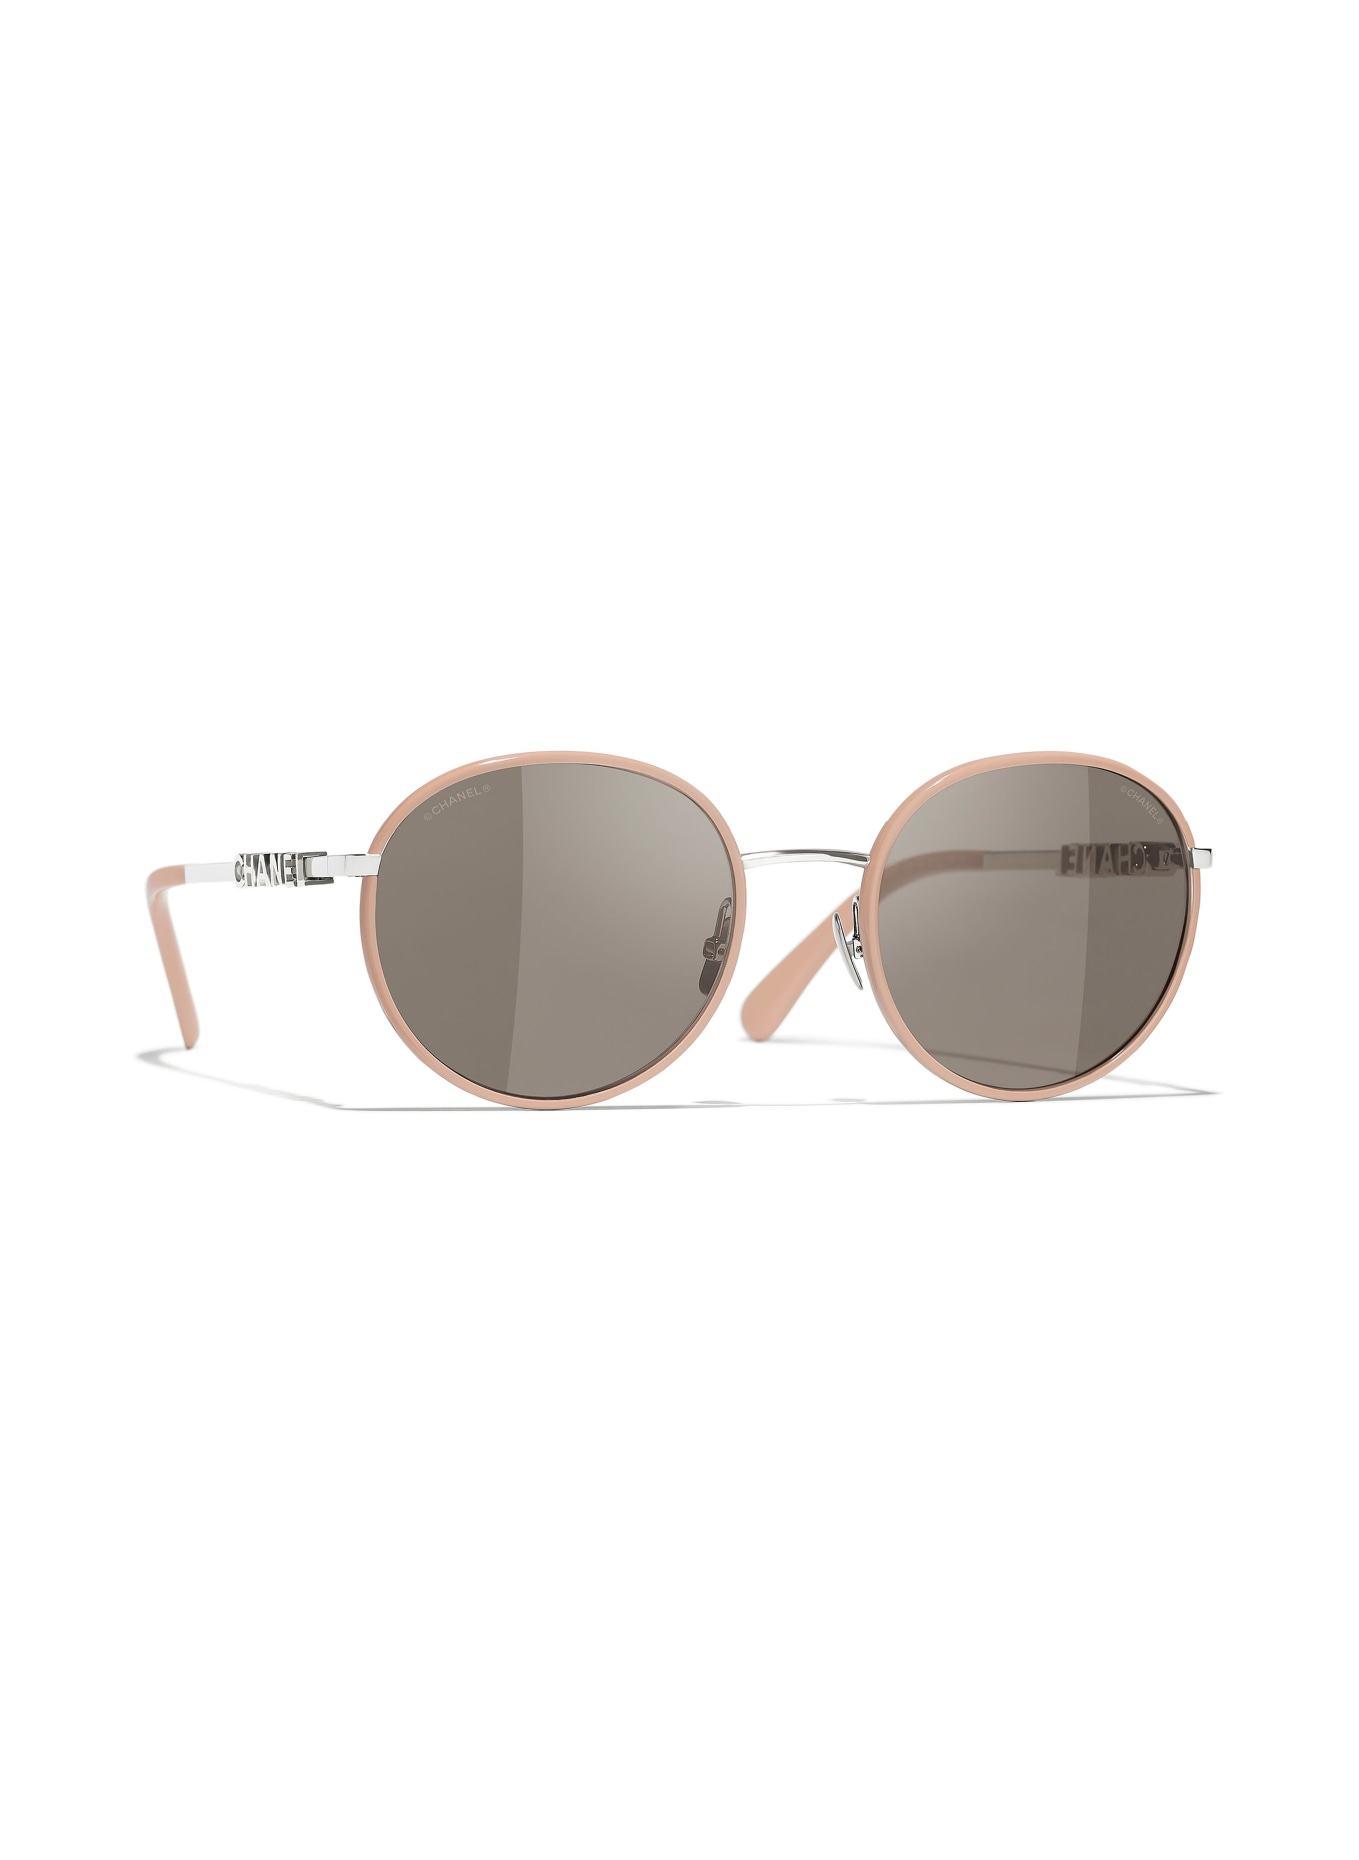 CHANEL Round sunglasses, Color: C261/3 - BEIGE/DARK GRAY (Image 1)